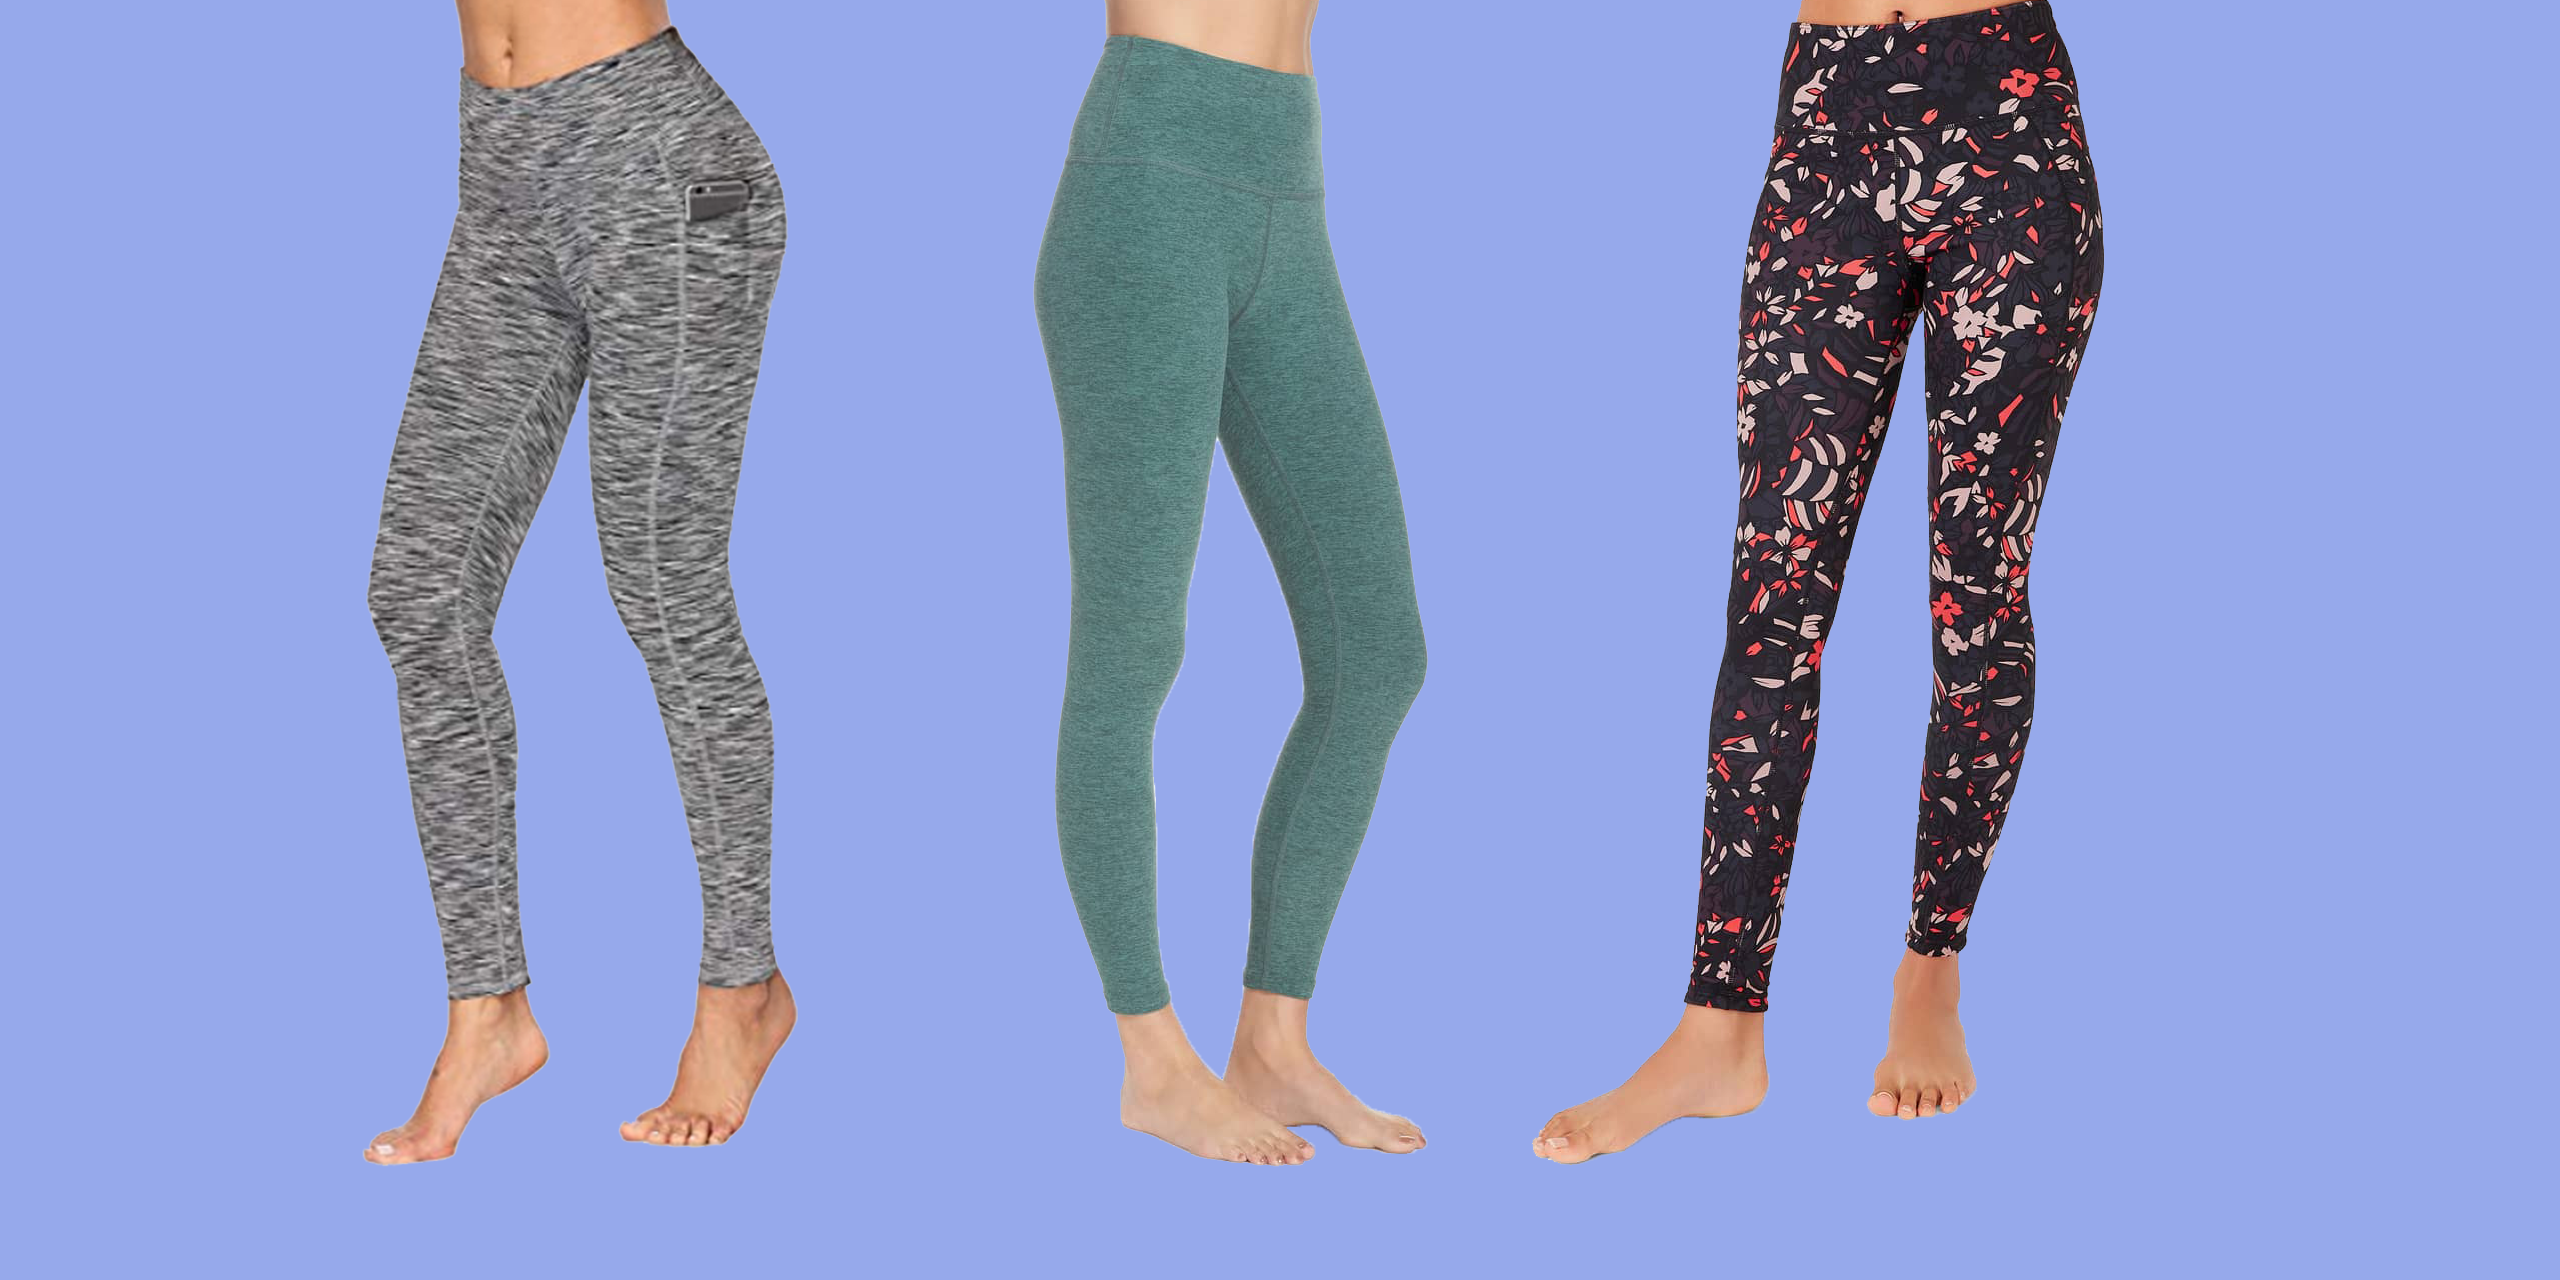 Best Yoga Pants For Women